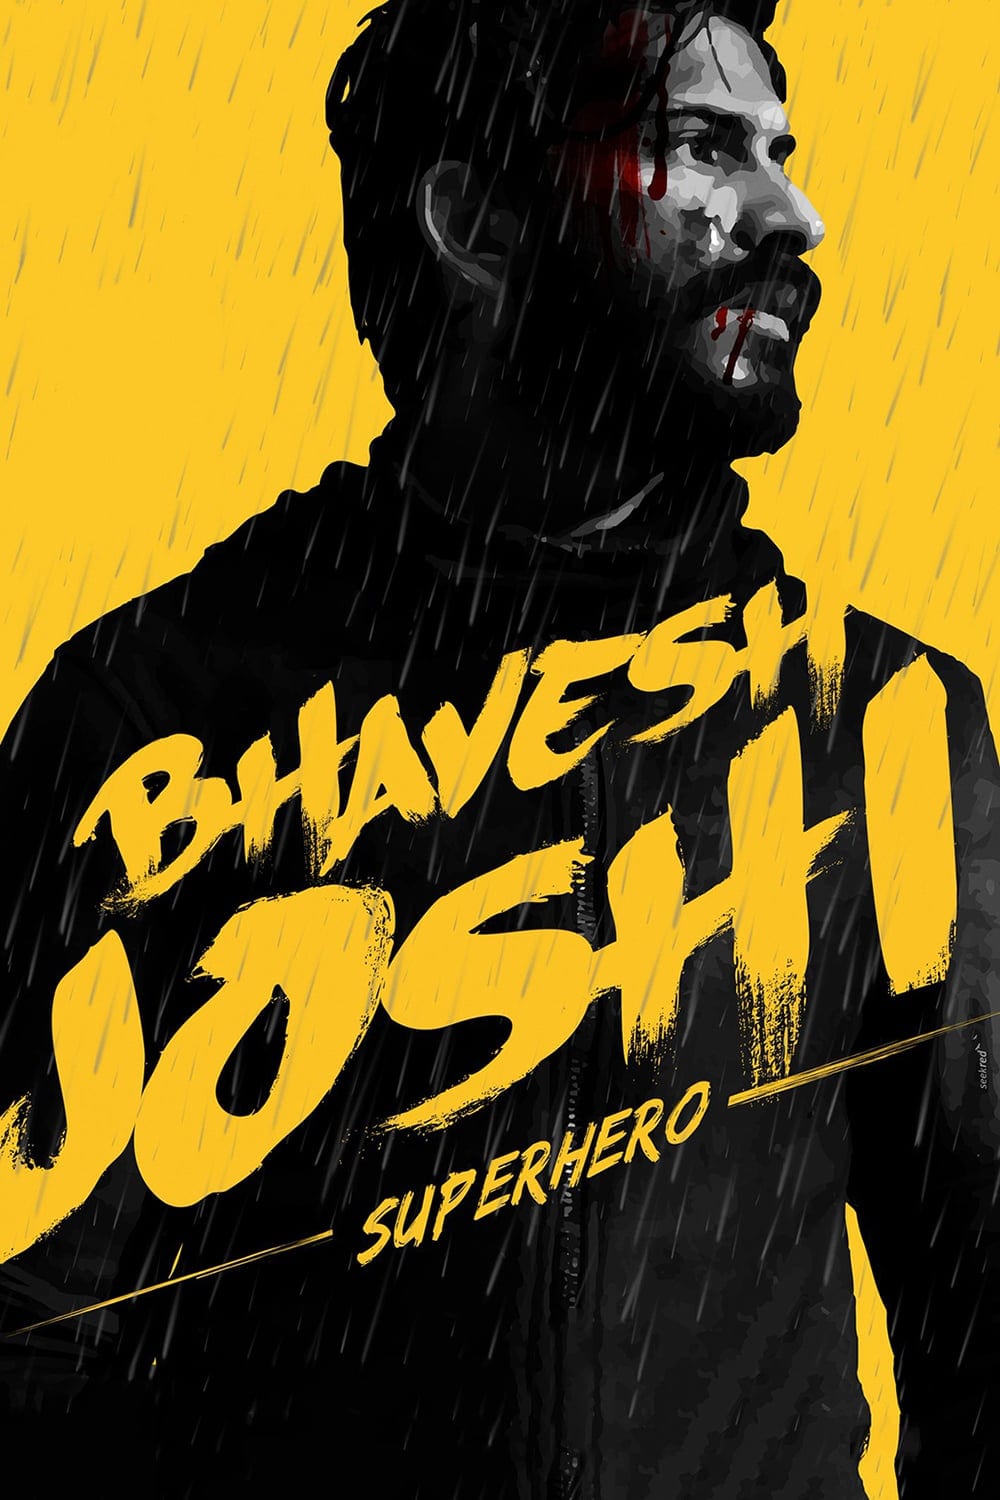 Poster for the movie "Bhavesh Joshi Superhero"